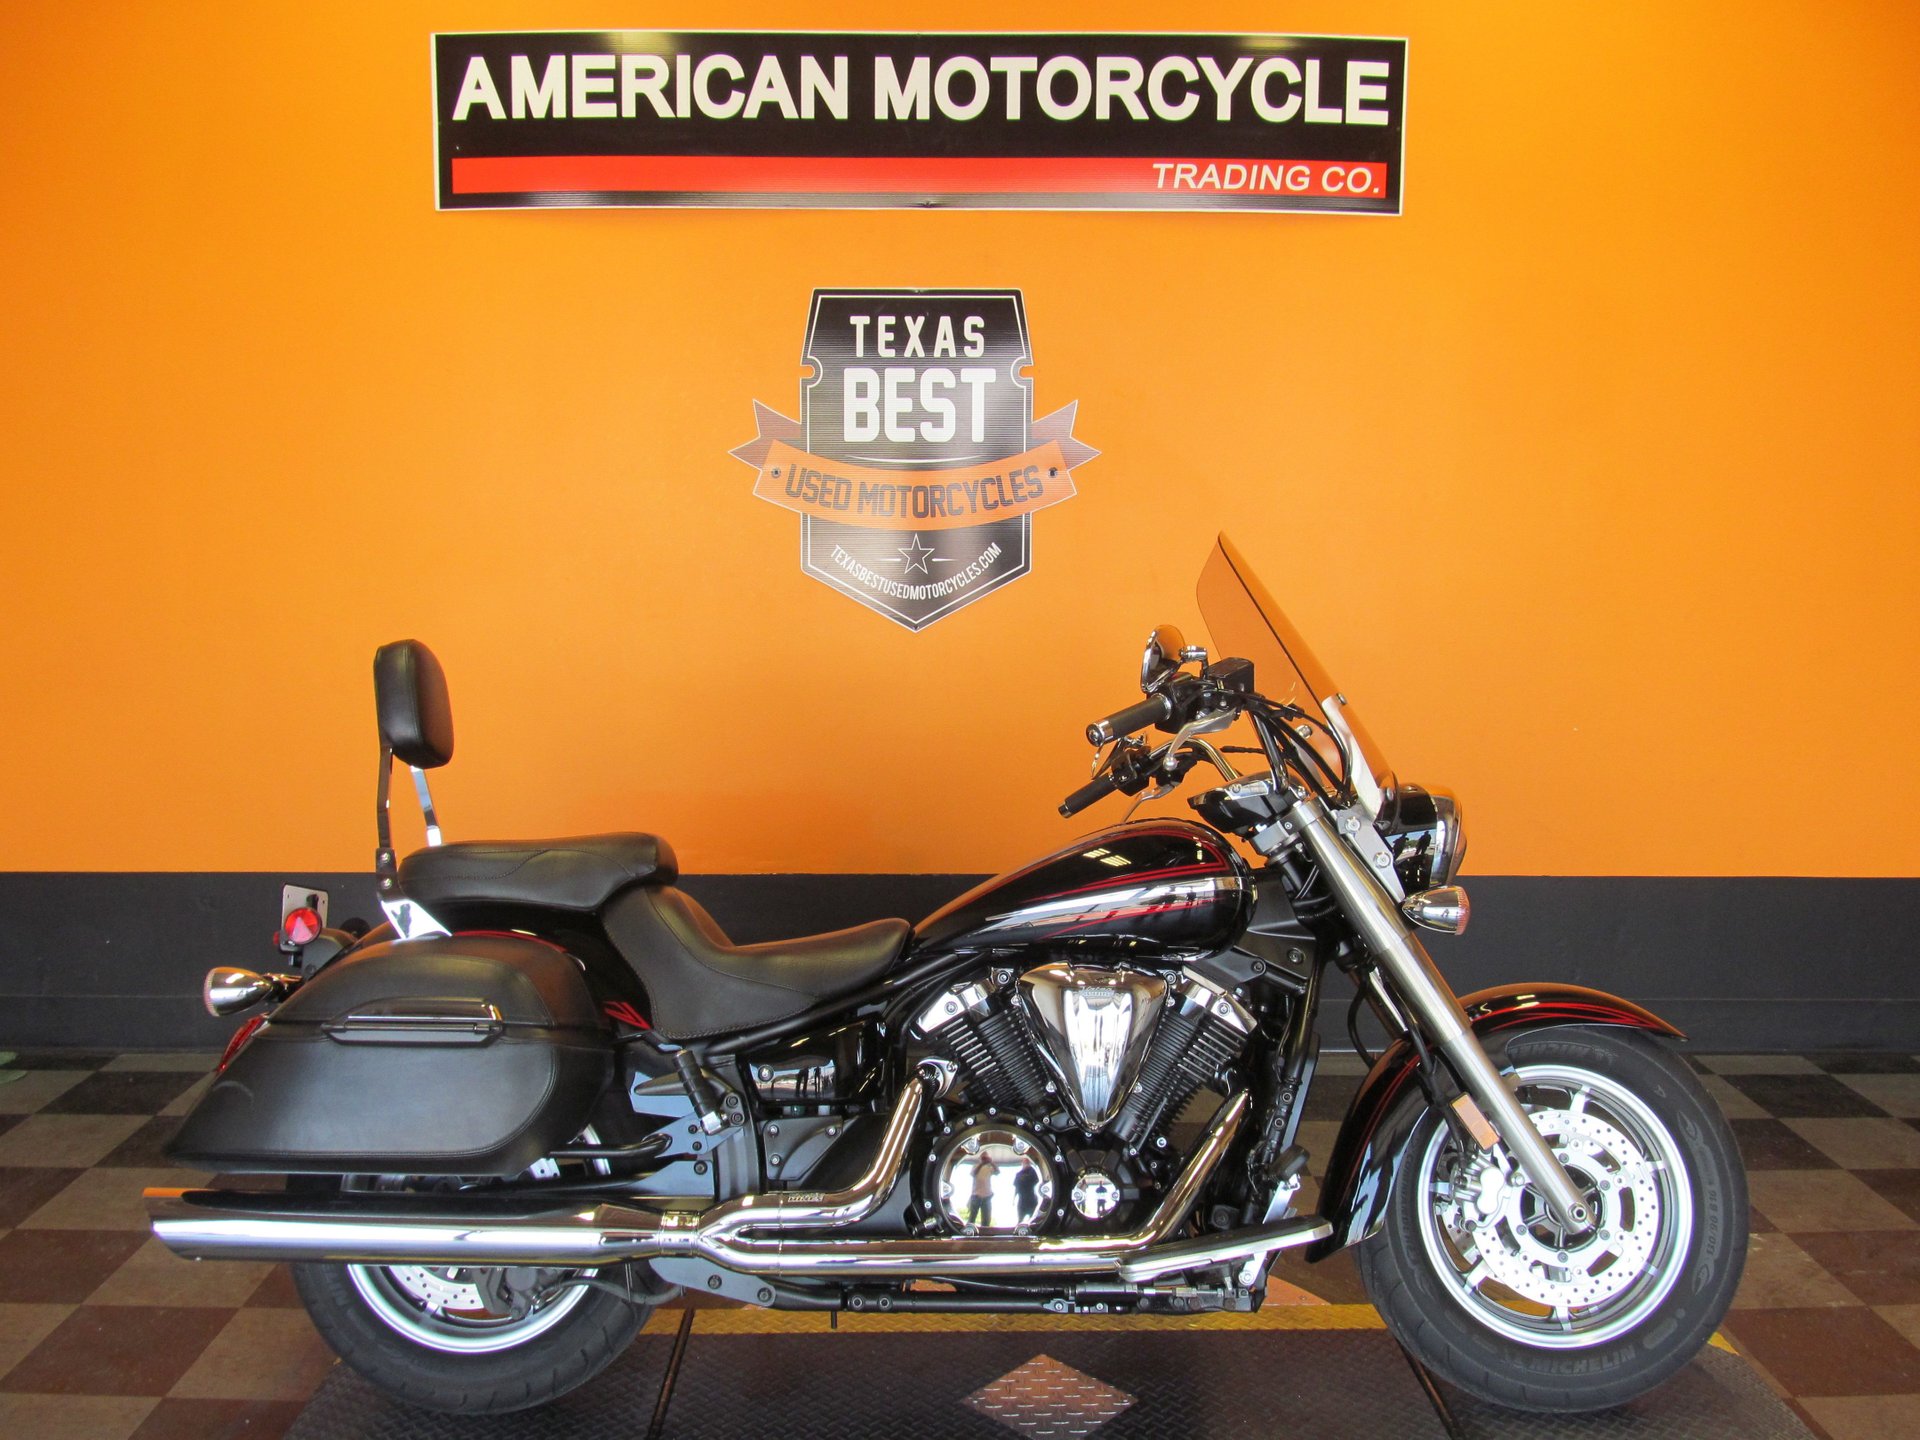 2009 Yamaha | American Motorcycle Trading Company - Used Harley ...